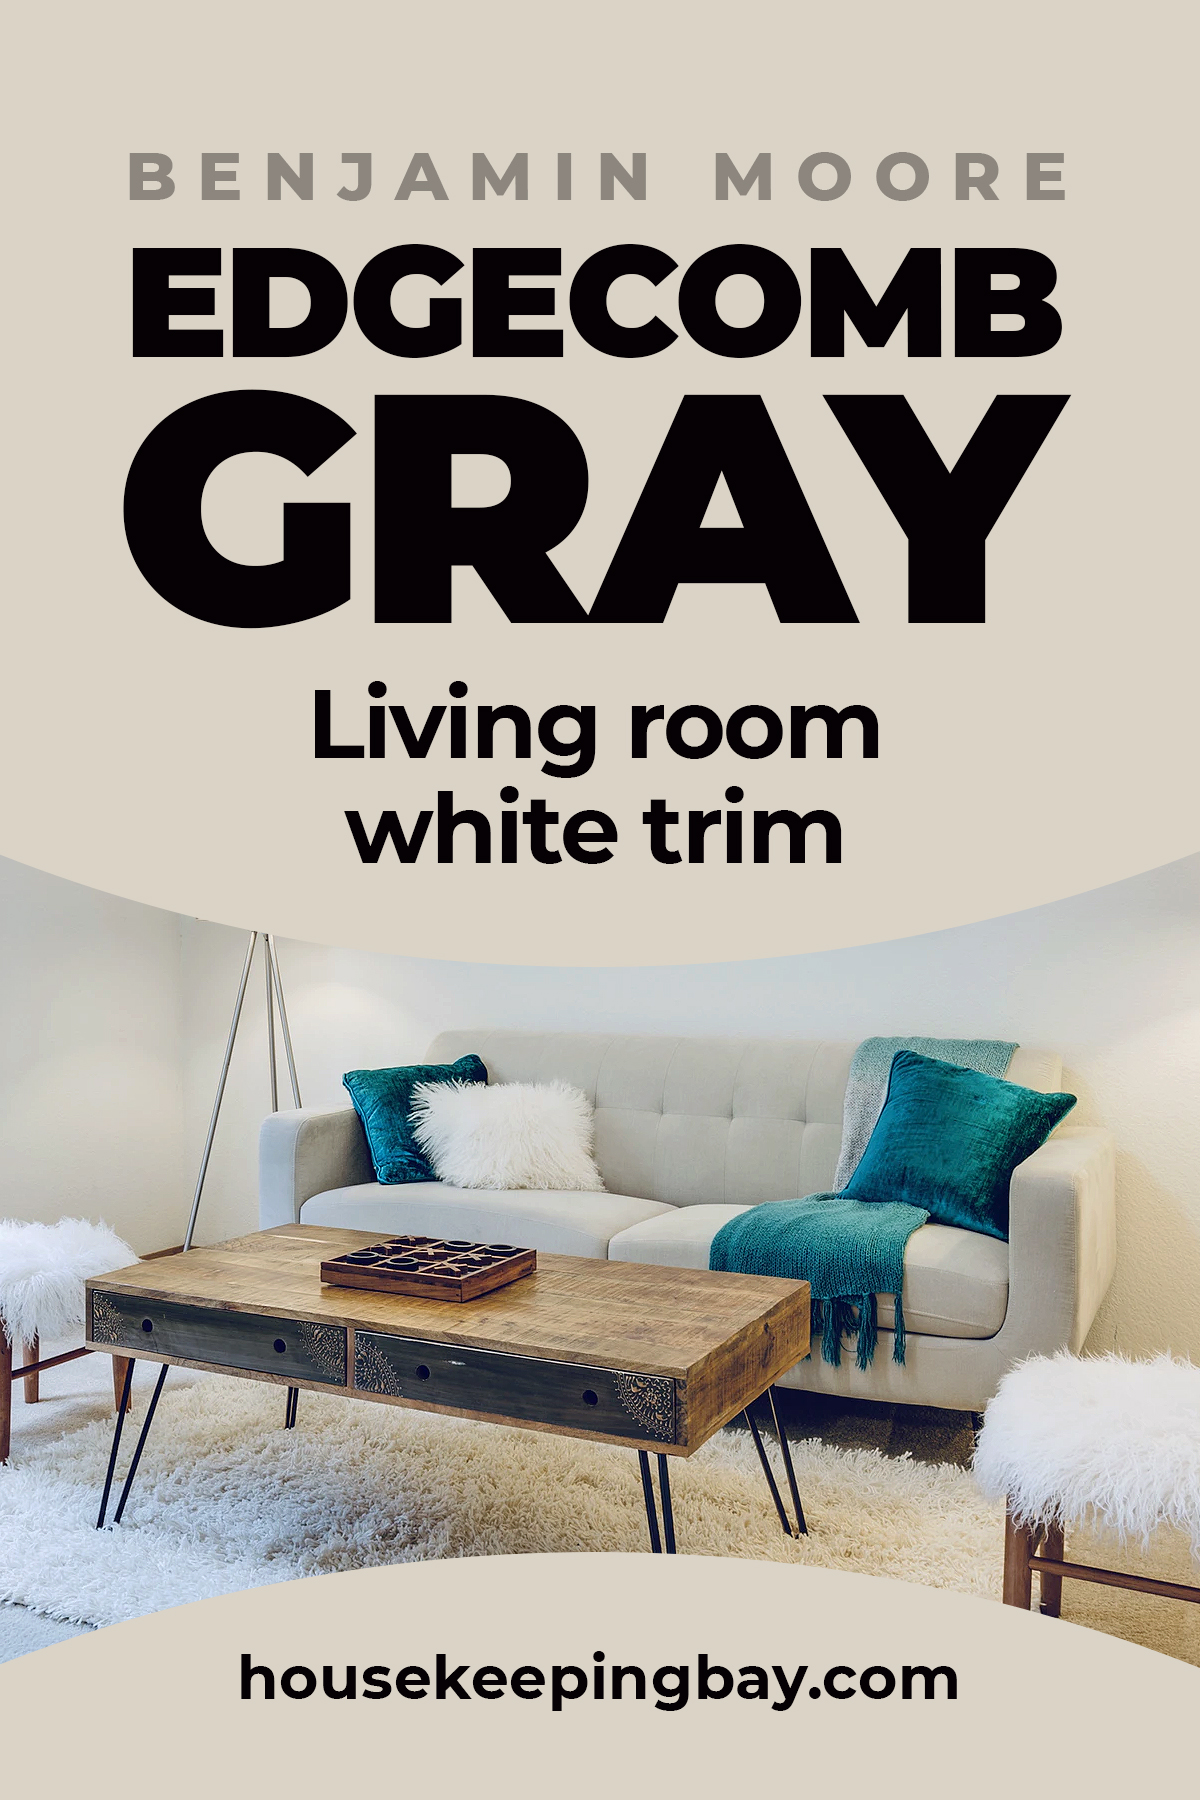 Edgecomb Gray living room white trim